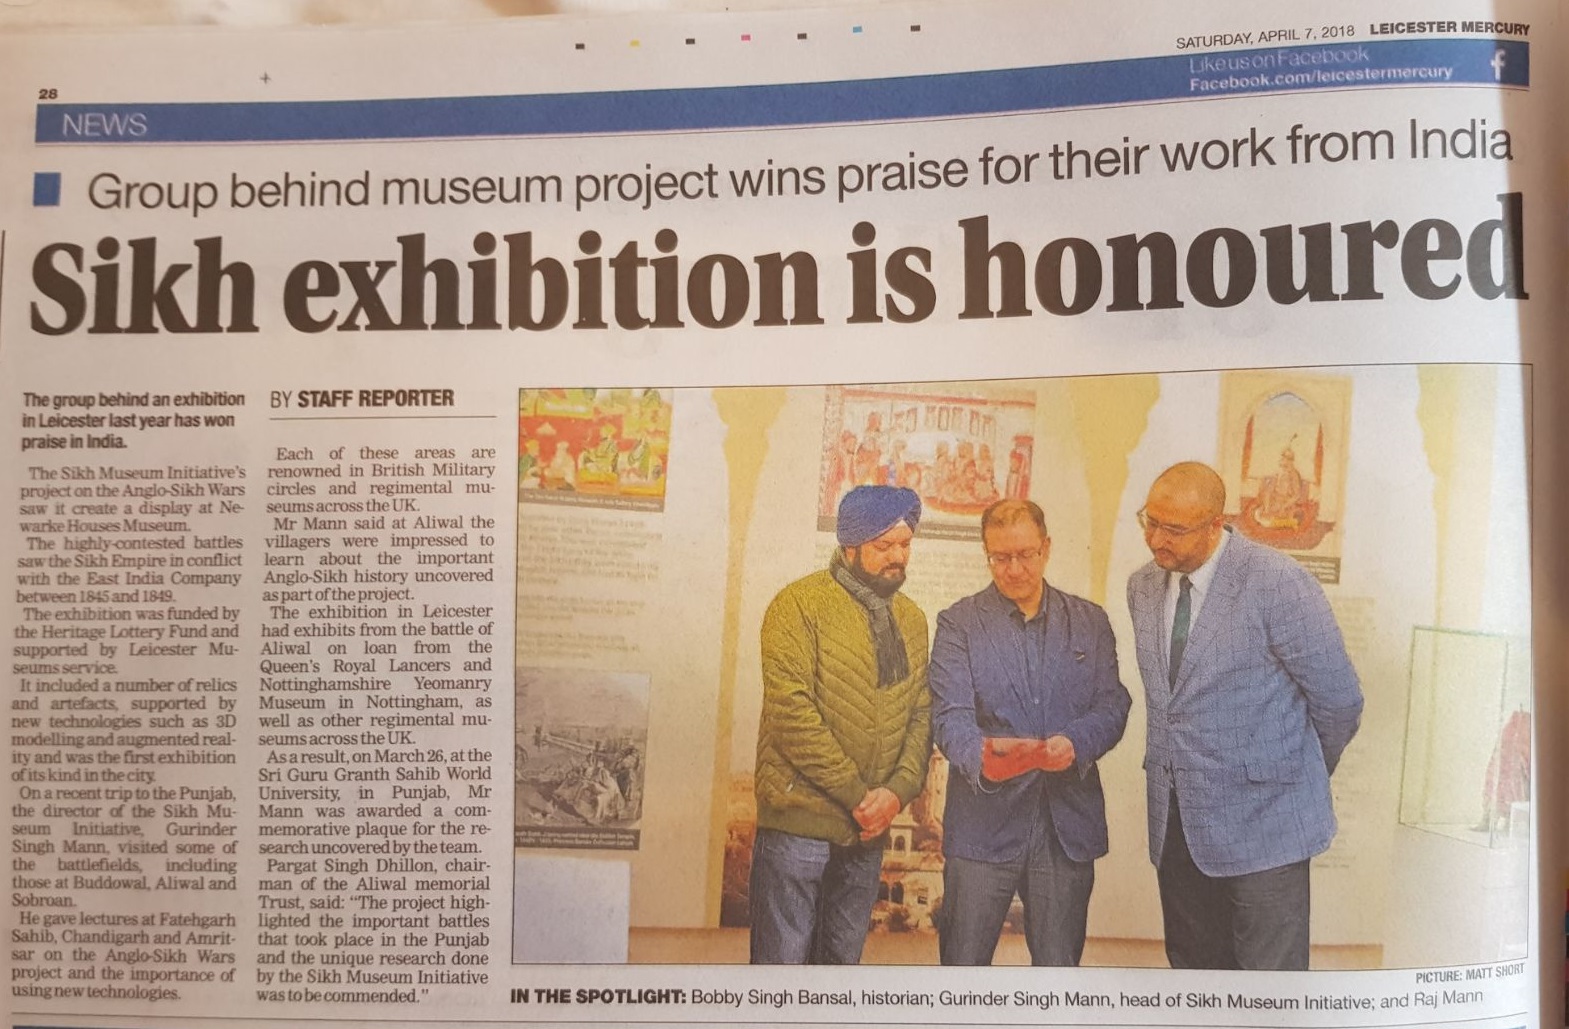 Exhibition award given to Sikh scholar Gurinder Singh Mann